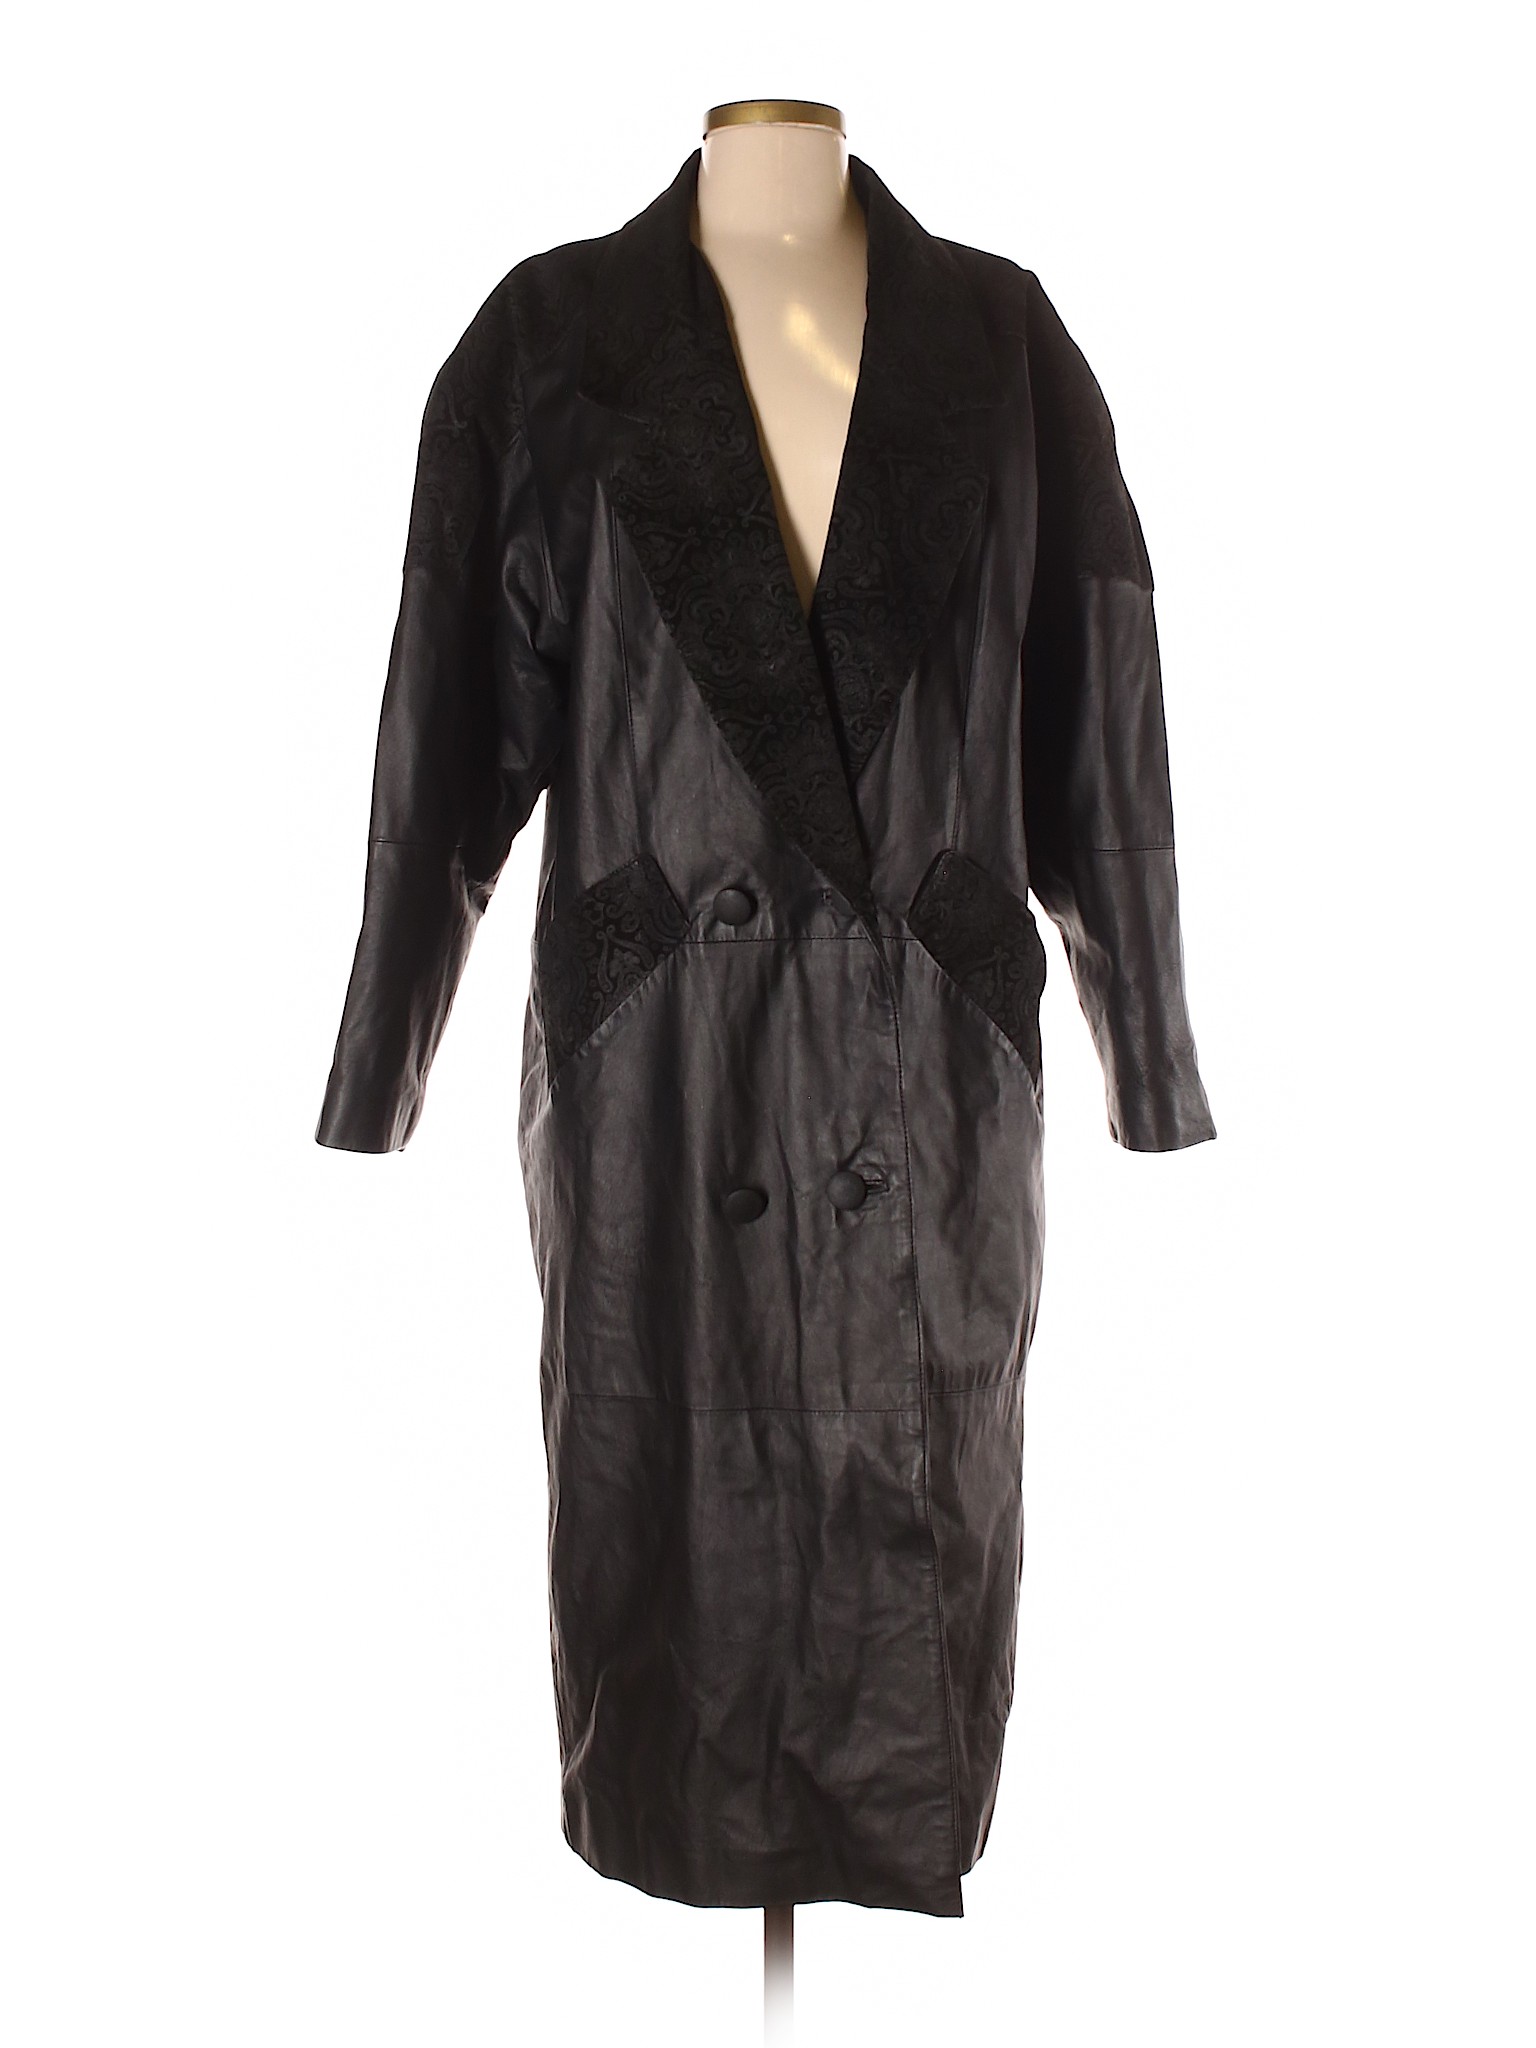 CHARLES KLEIN Women Black Leather Jacket S | eBay